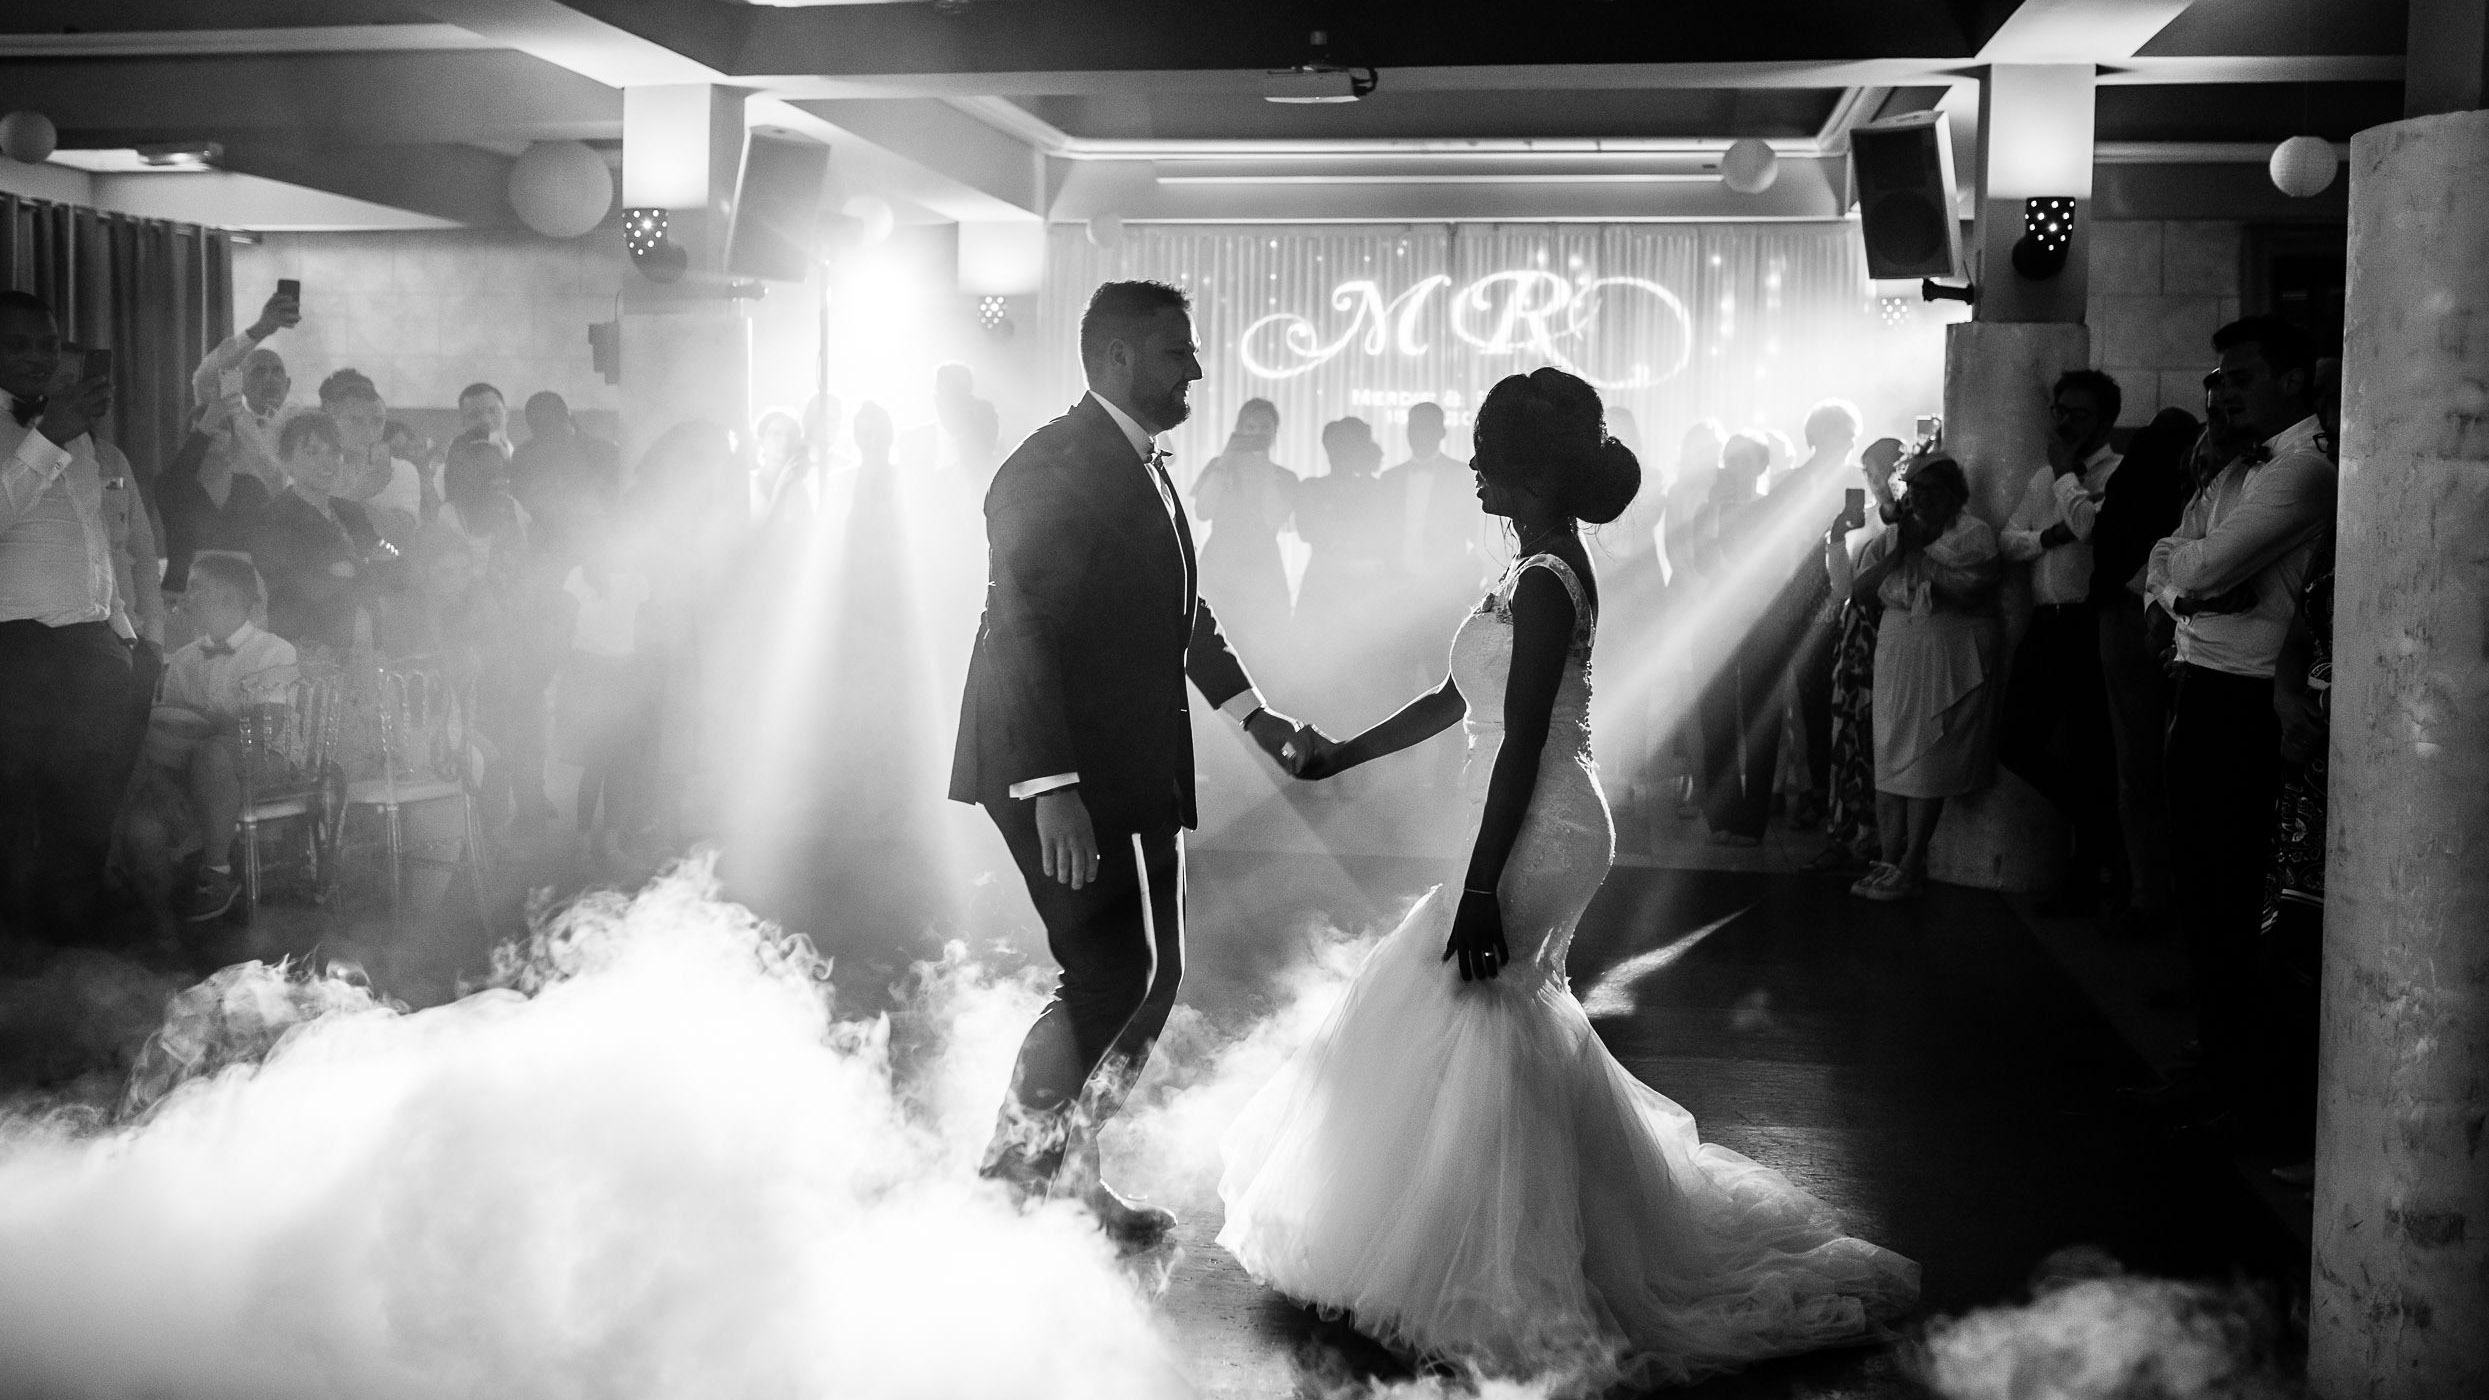 Ouverture de bal - Perfect moment by A - Wedding Planner Reims